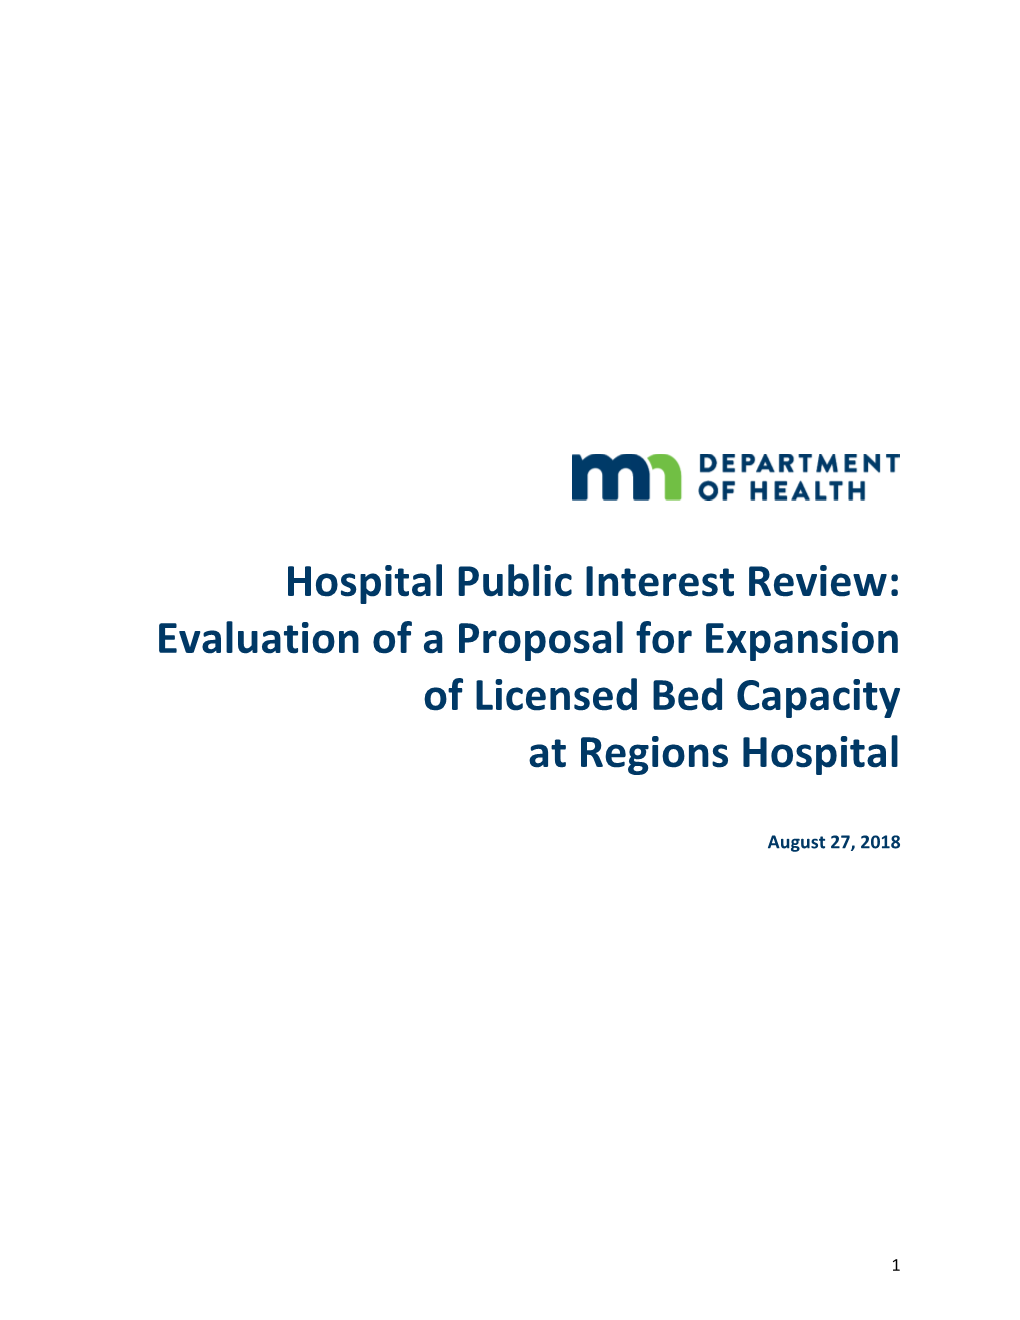 Regions Hospital Public Interest Review